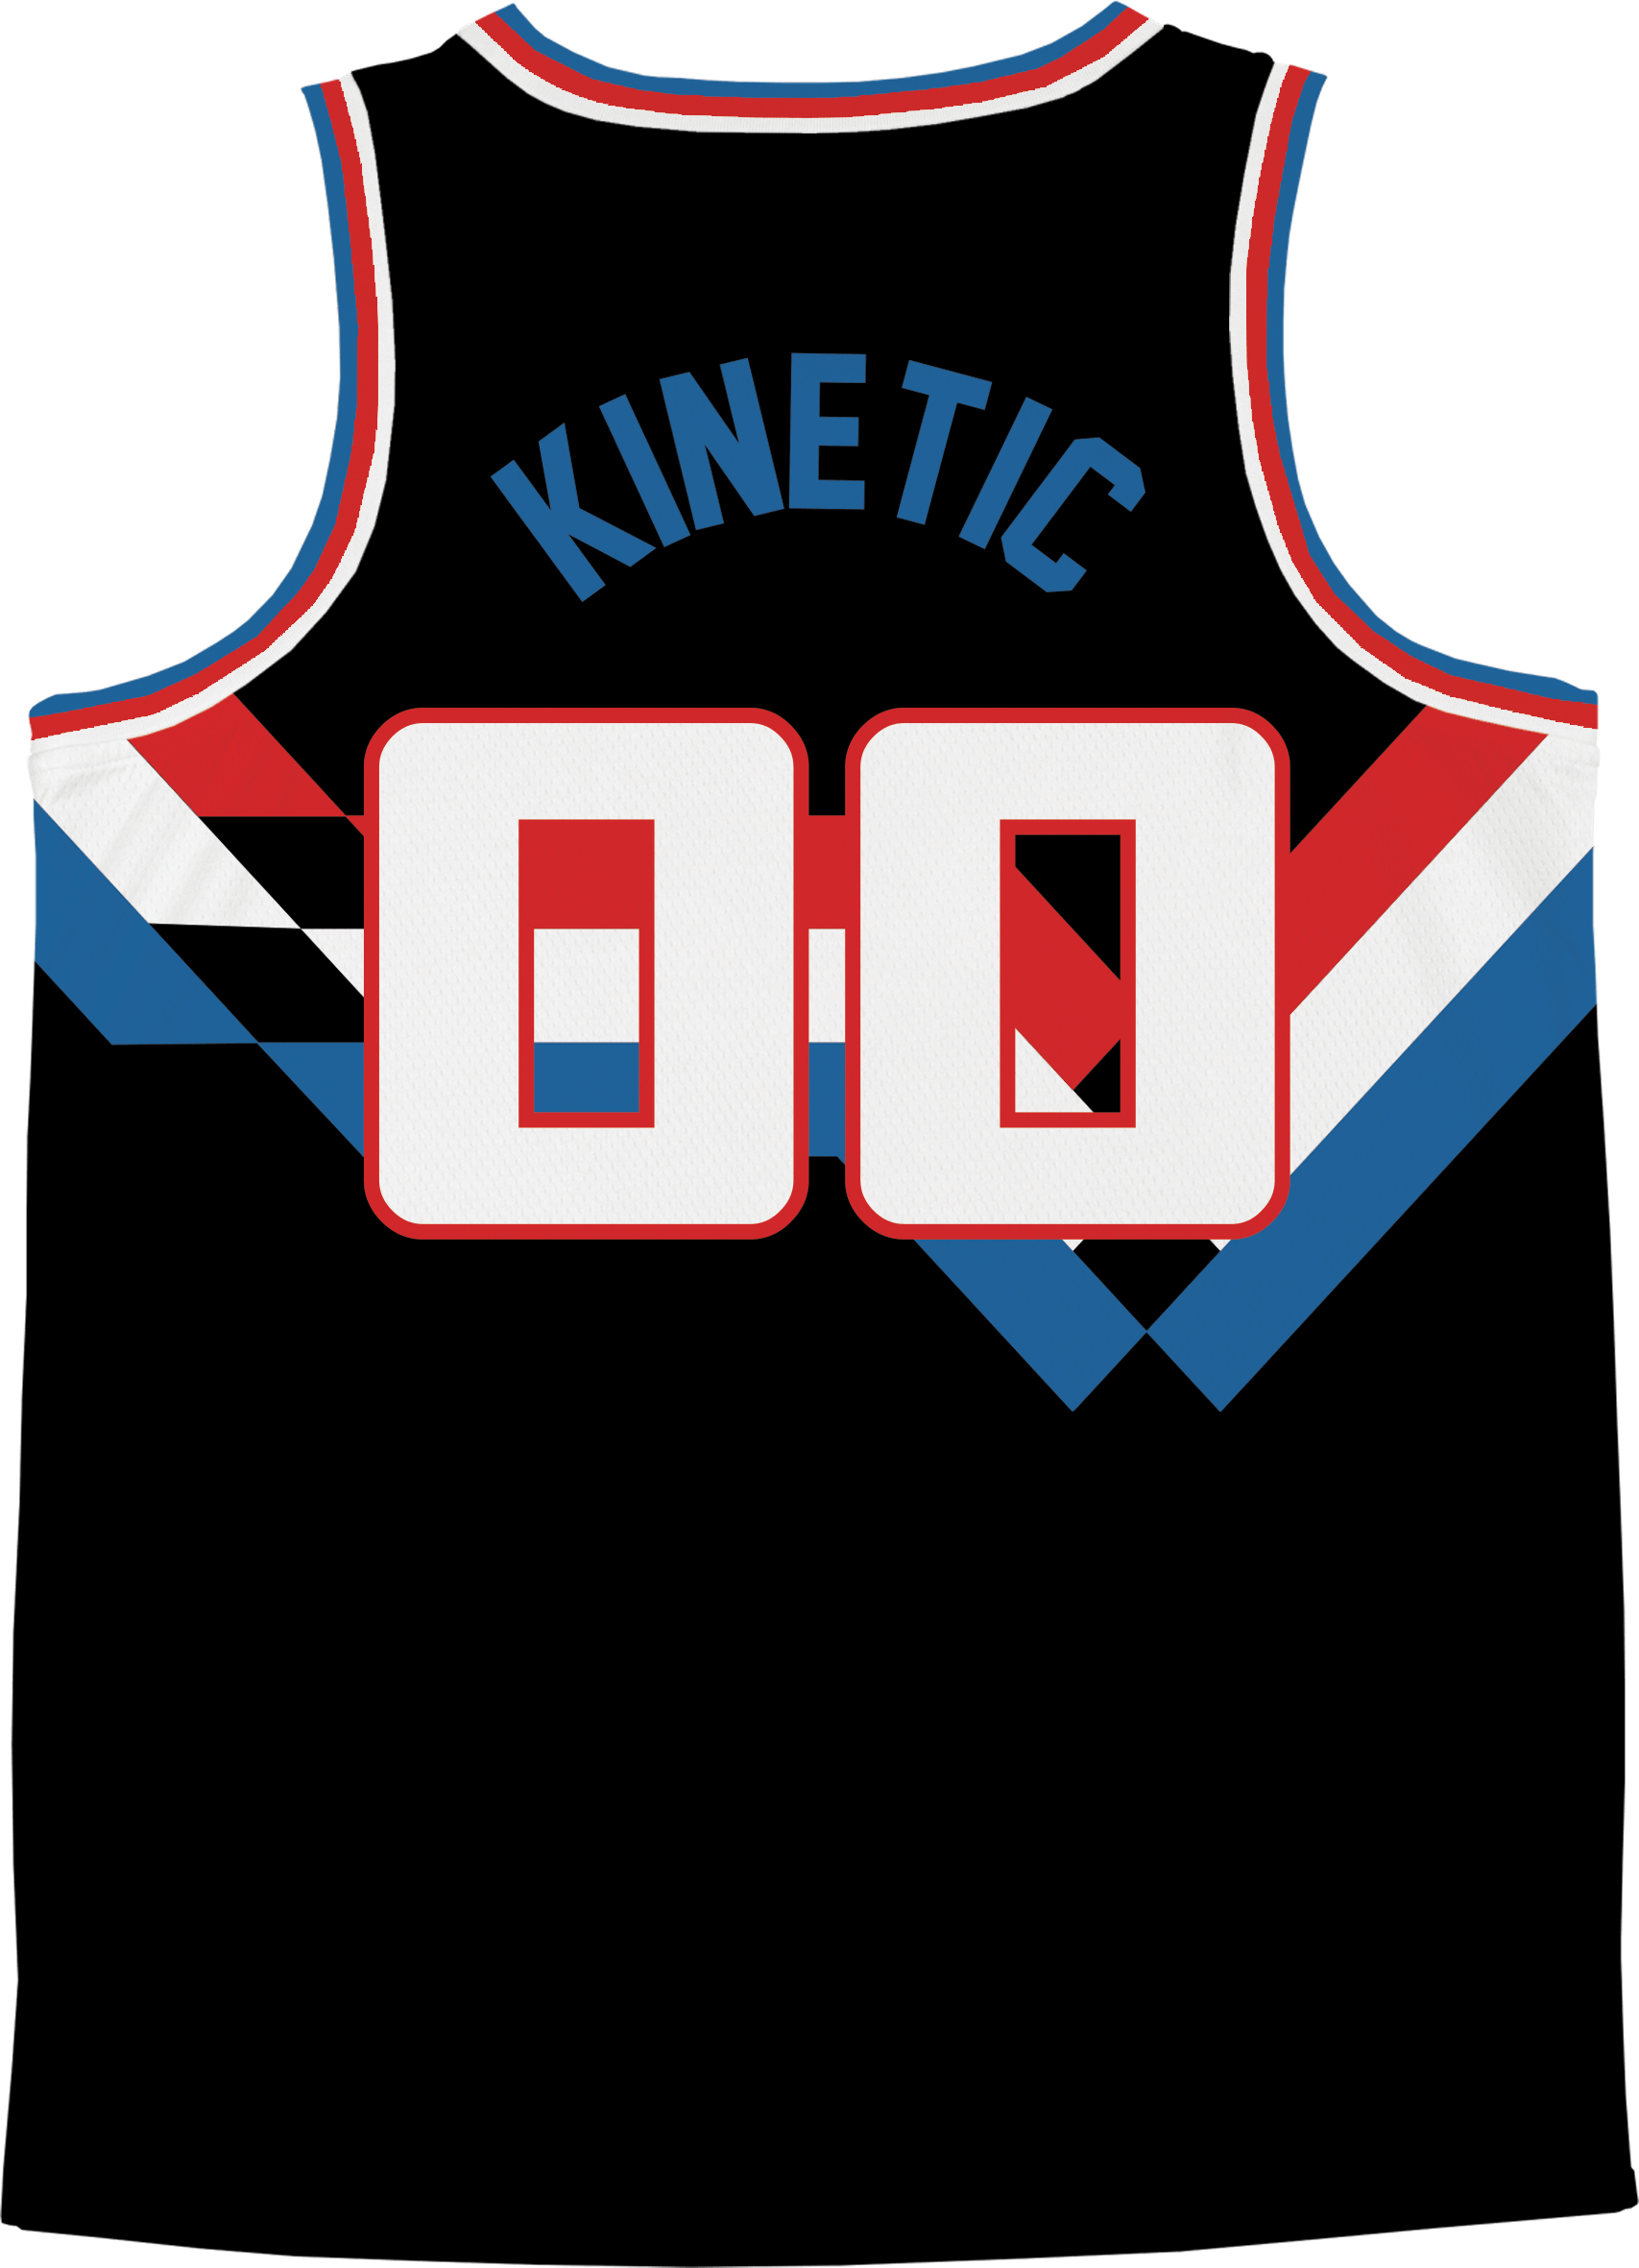 Kappa Delta Rho - Victory Streak Basketball Jersey Premium Basketball Kinetic Society LLC 